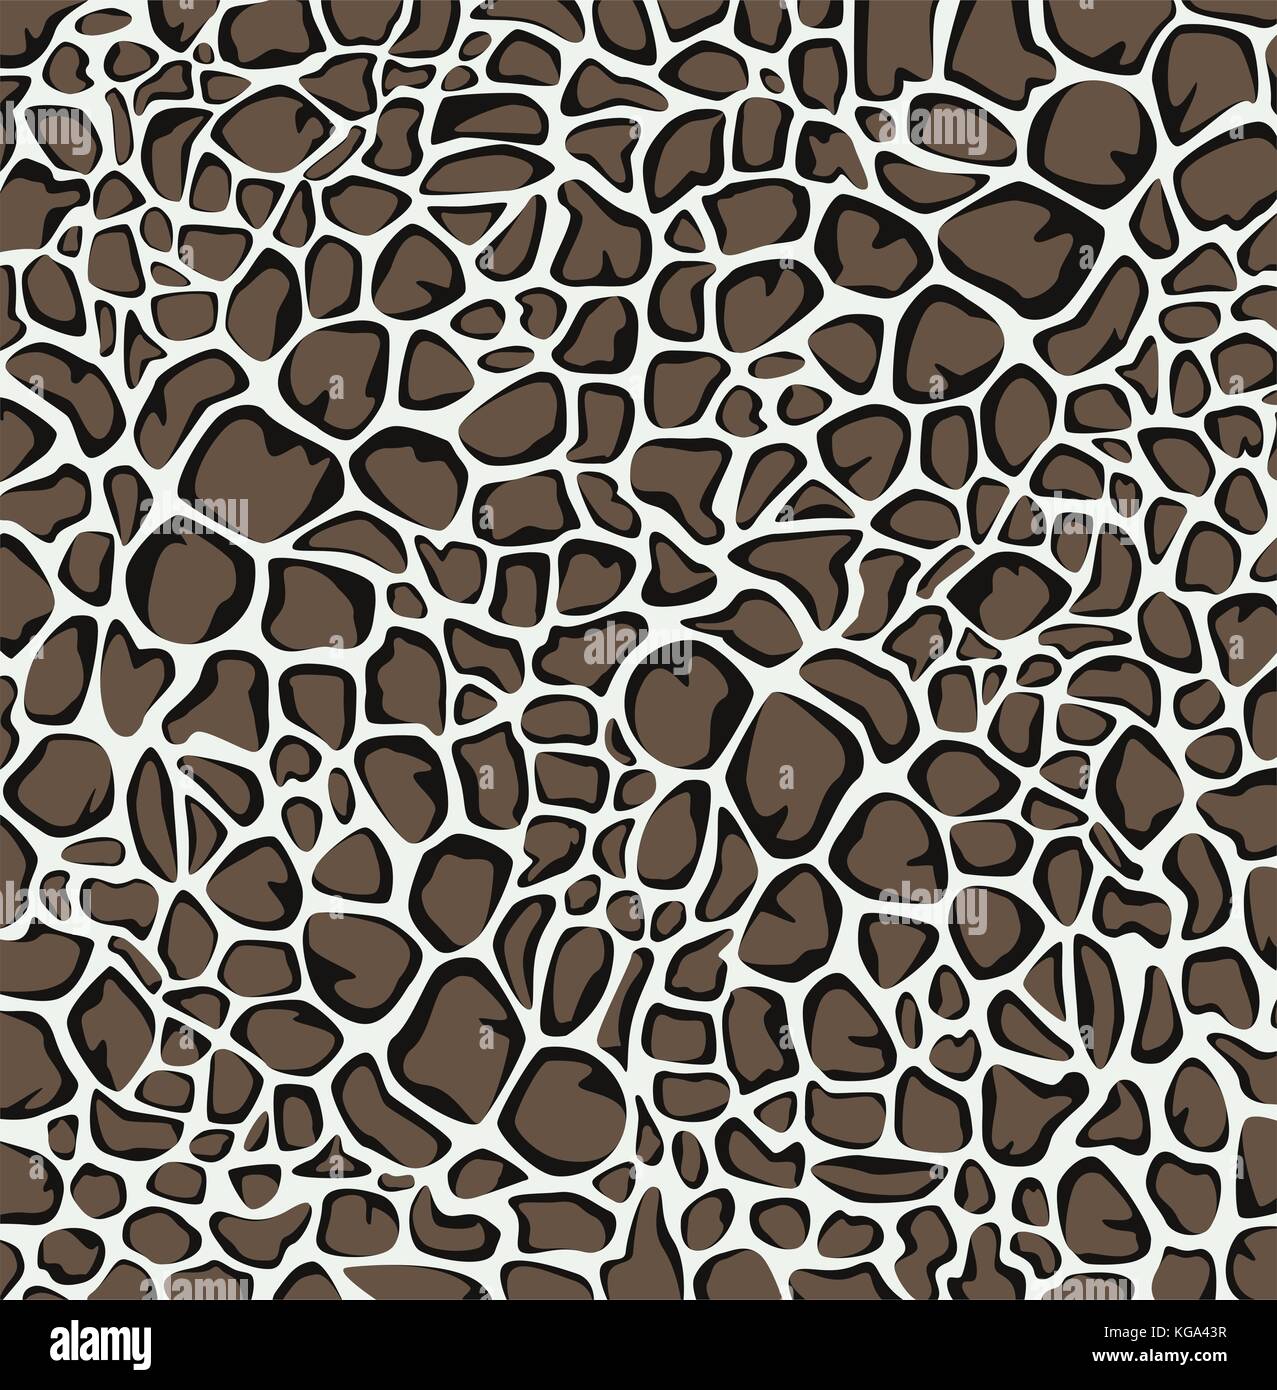 vector animal skin pattern of giraffe print Stock Vector